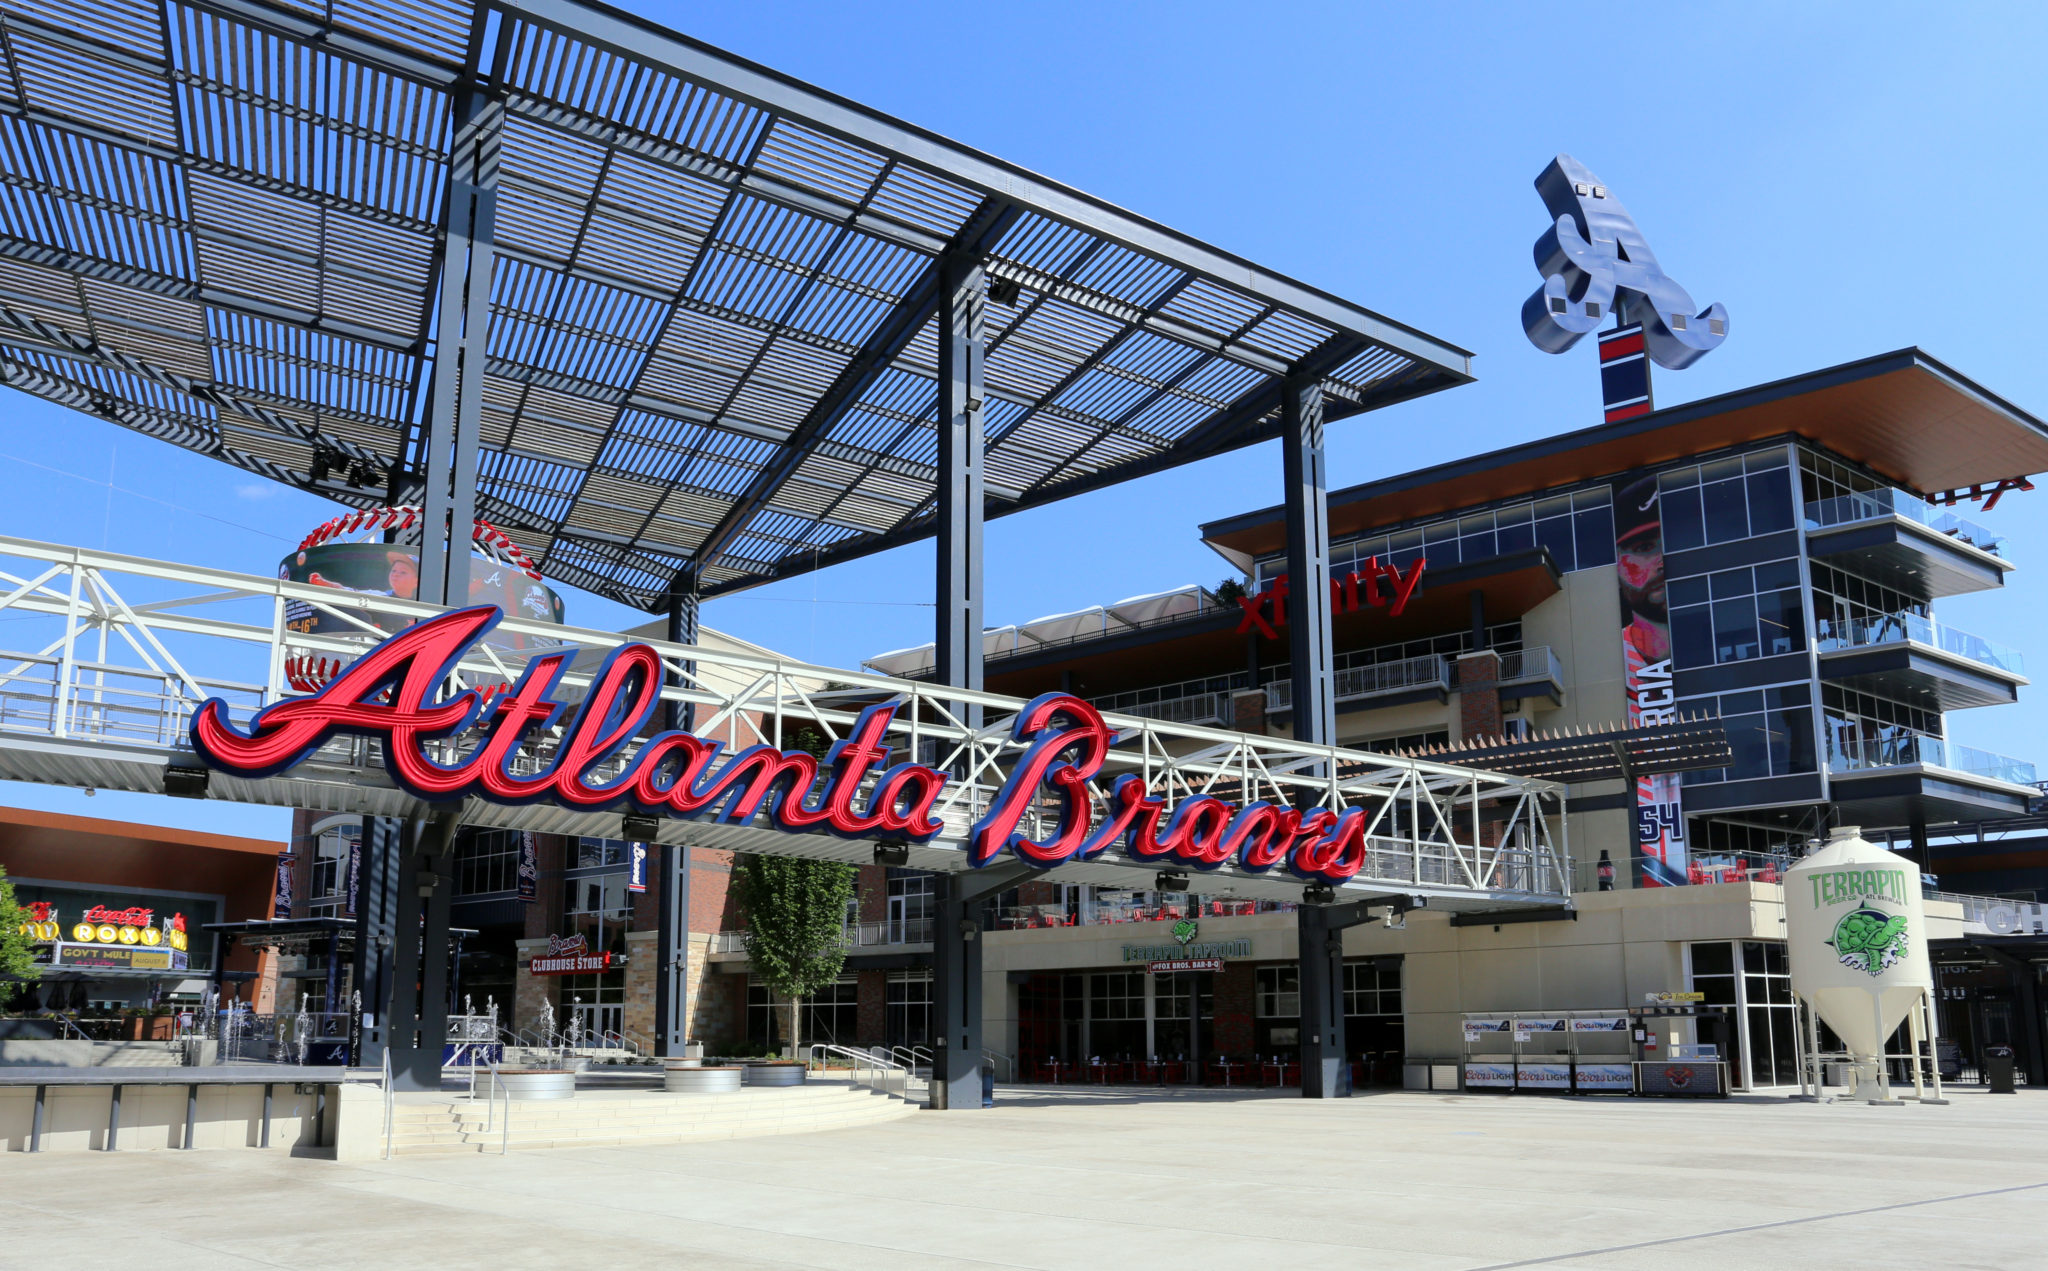 Step Inside: Truist Park - Home of the Atlanta Braves